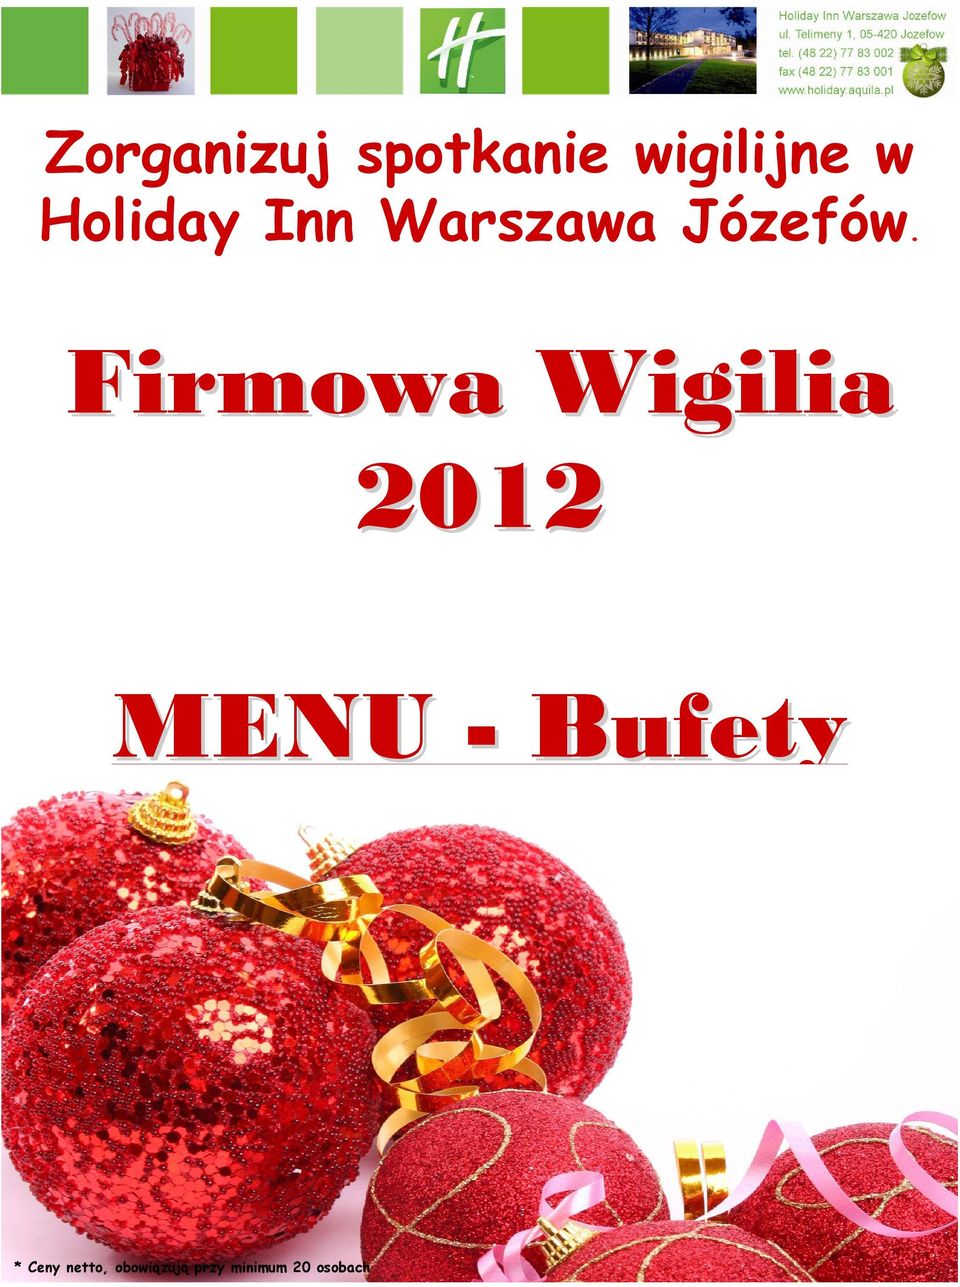 Firmowa Wigilia 2012 MENU - Bufety *